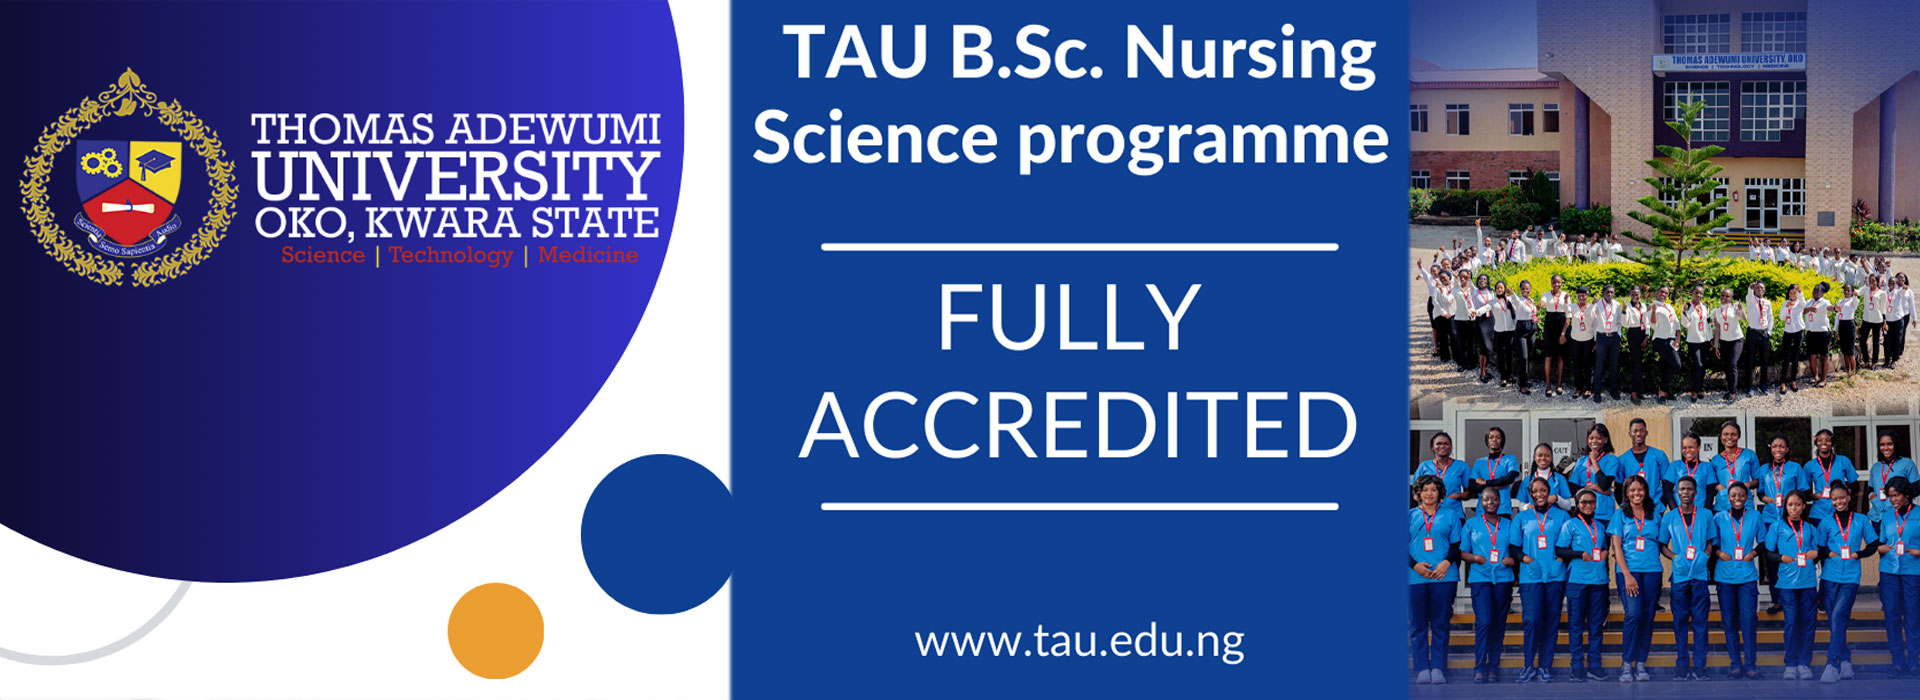 Nursing Accreditation